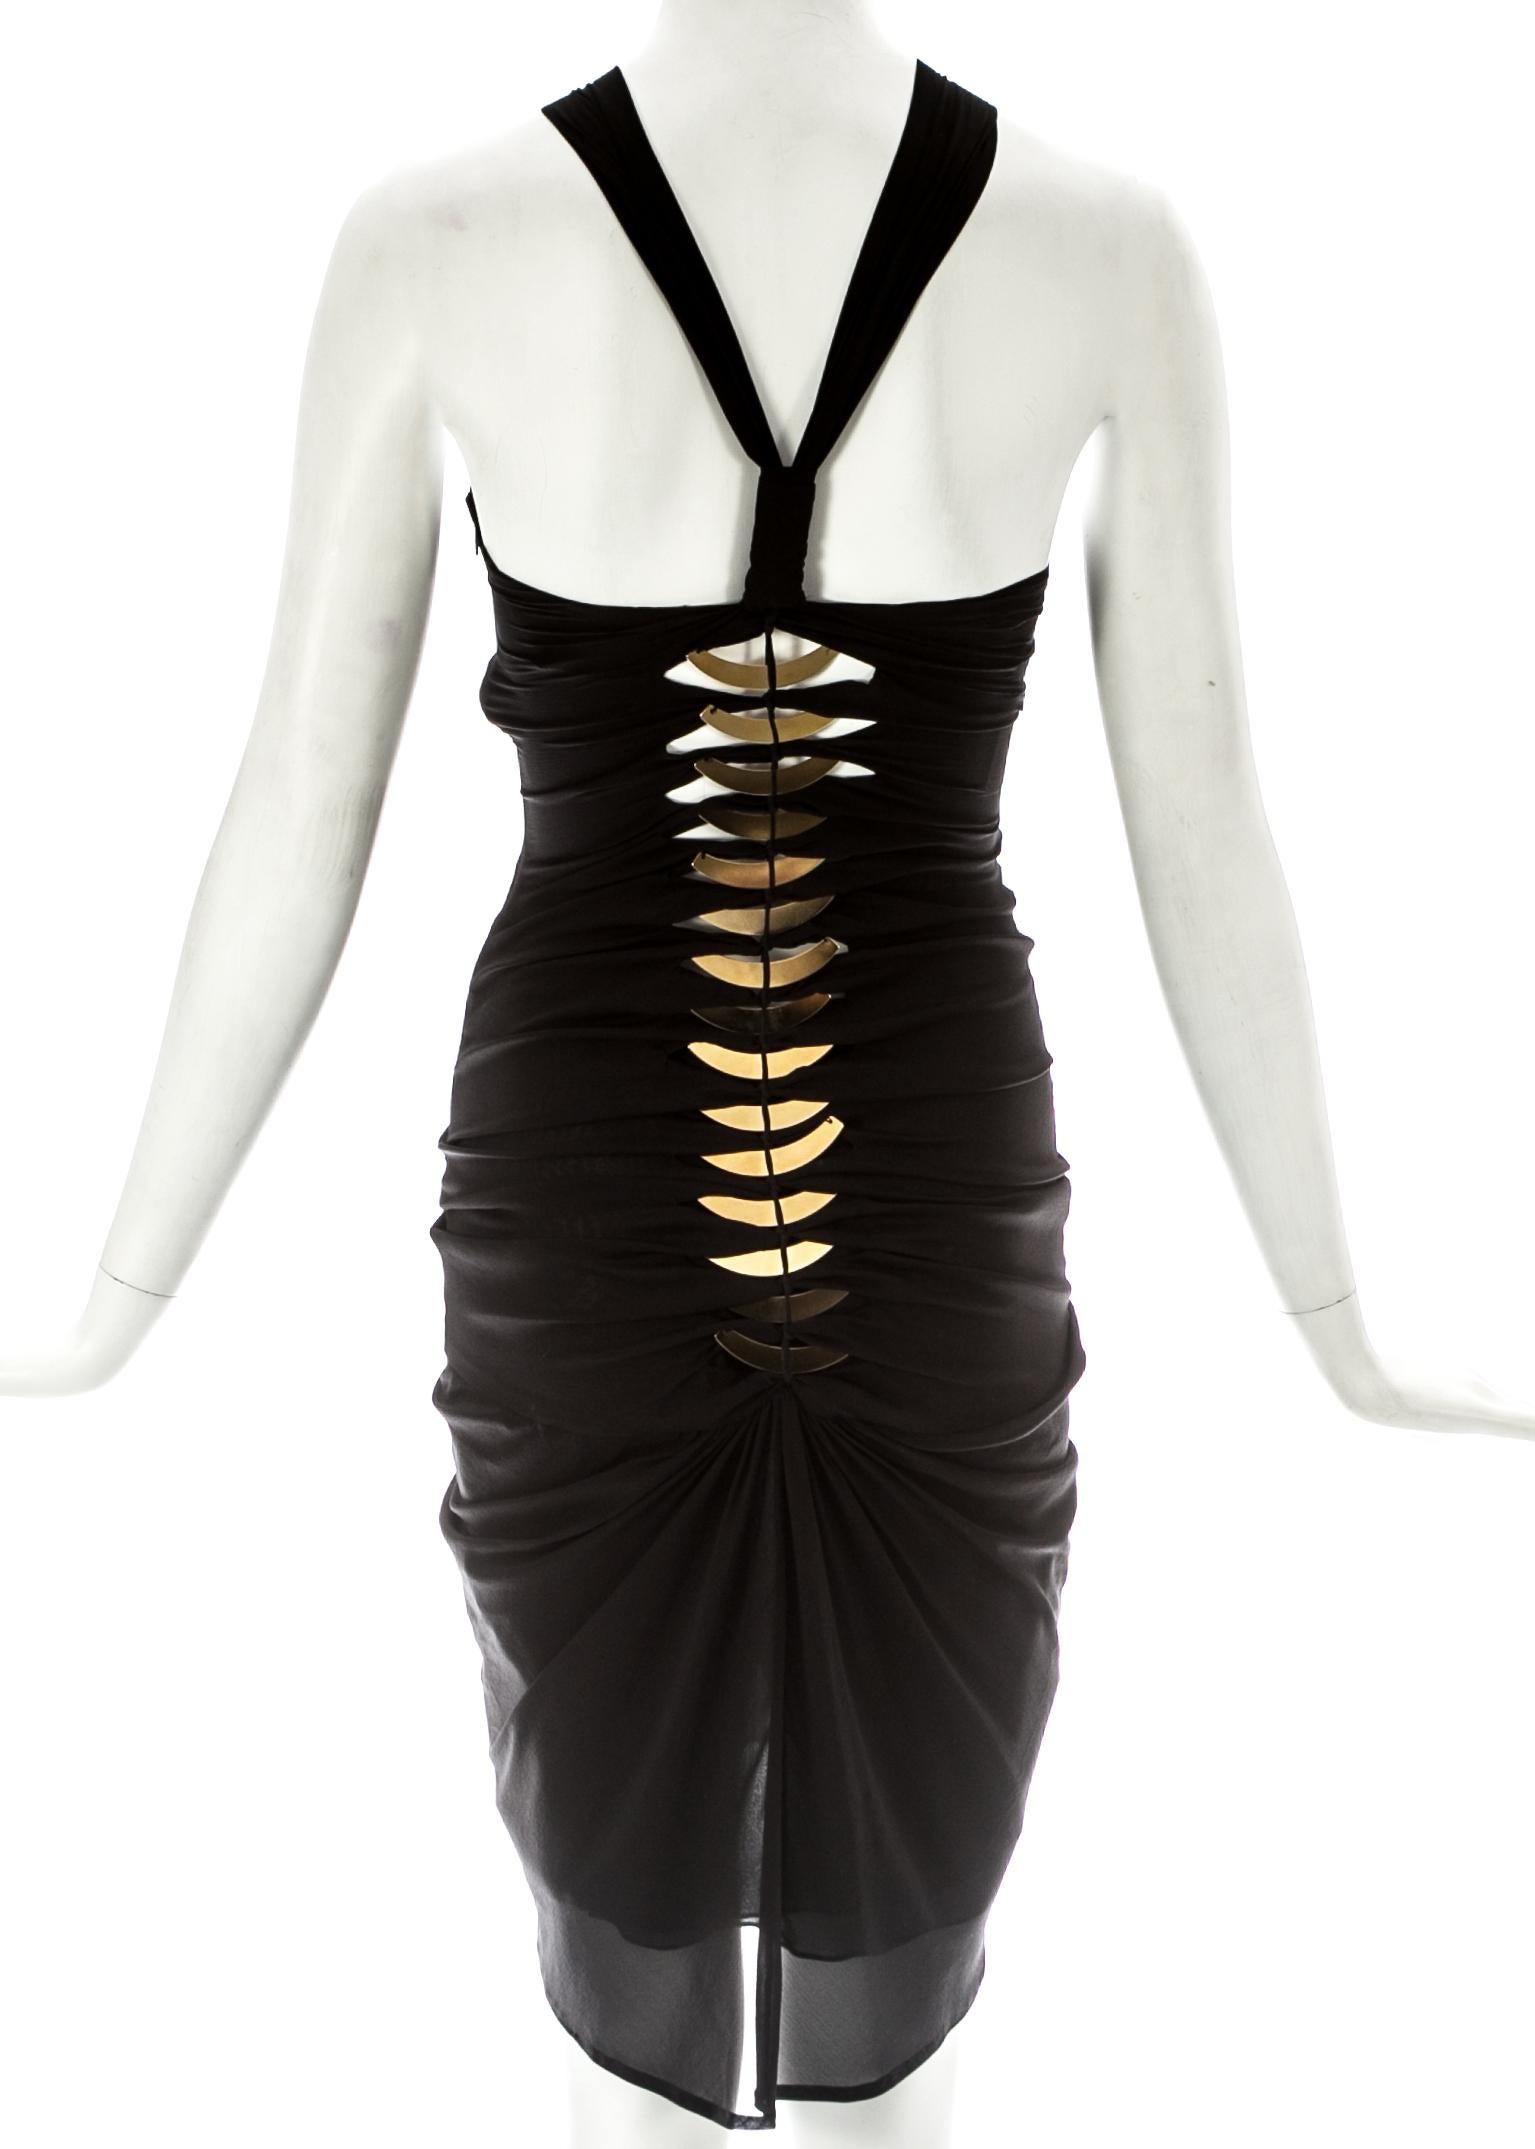 Black Tom Ford for Gucci black silk spandex mini dress with gold metal plates, c. 2004